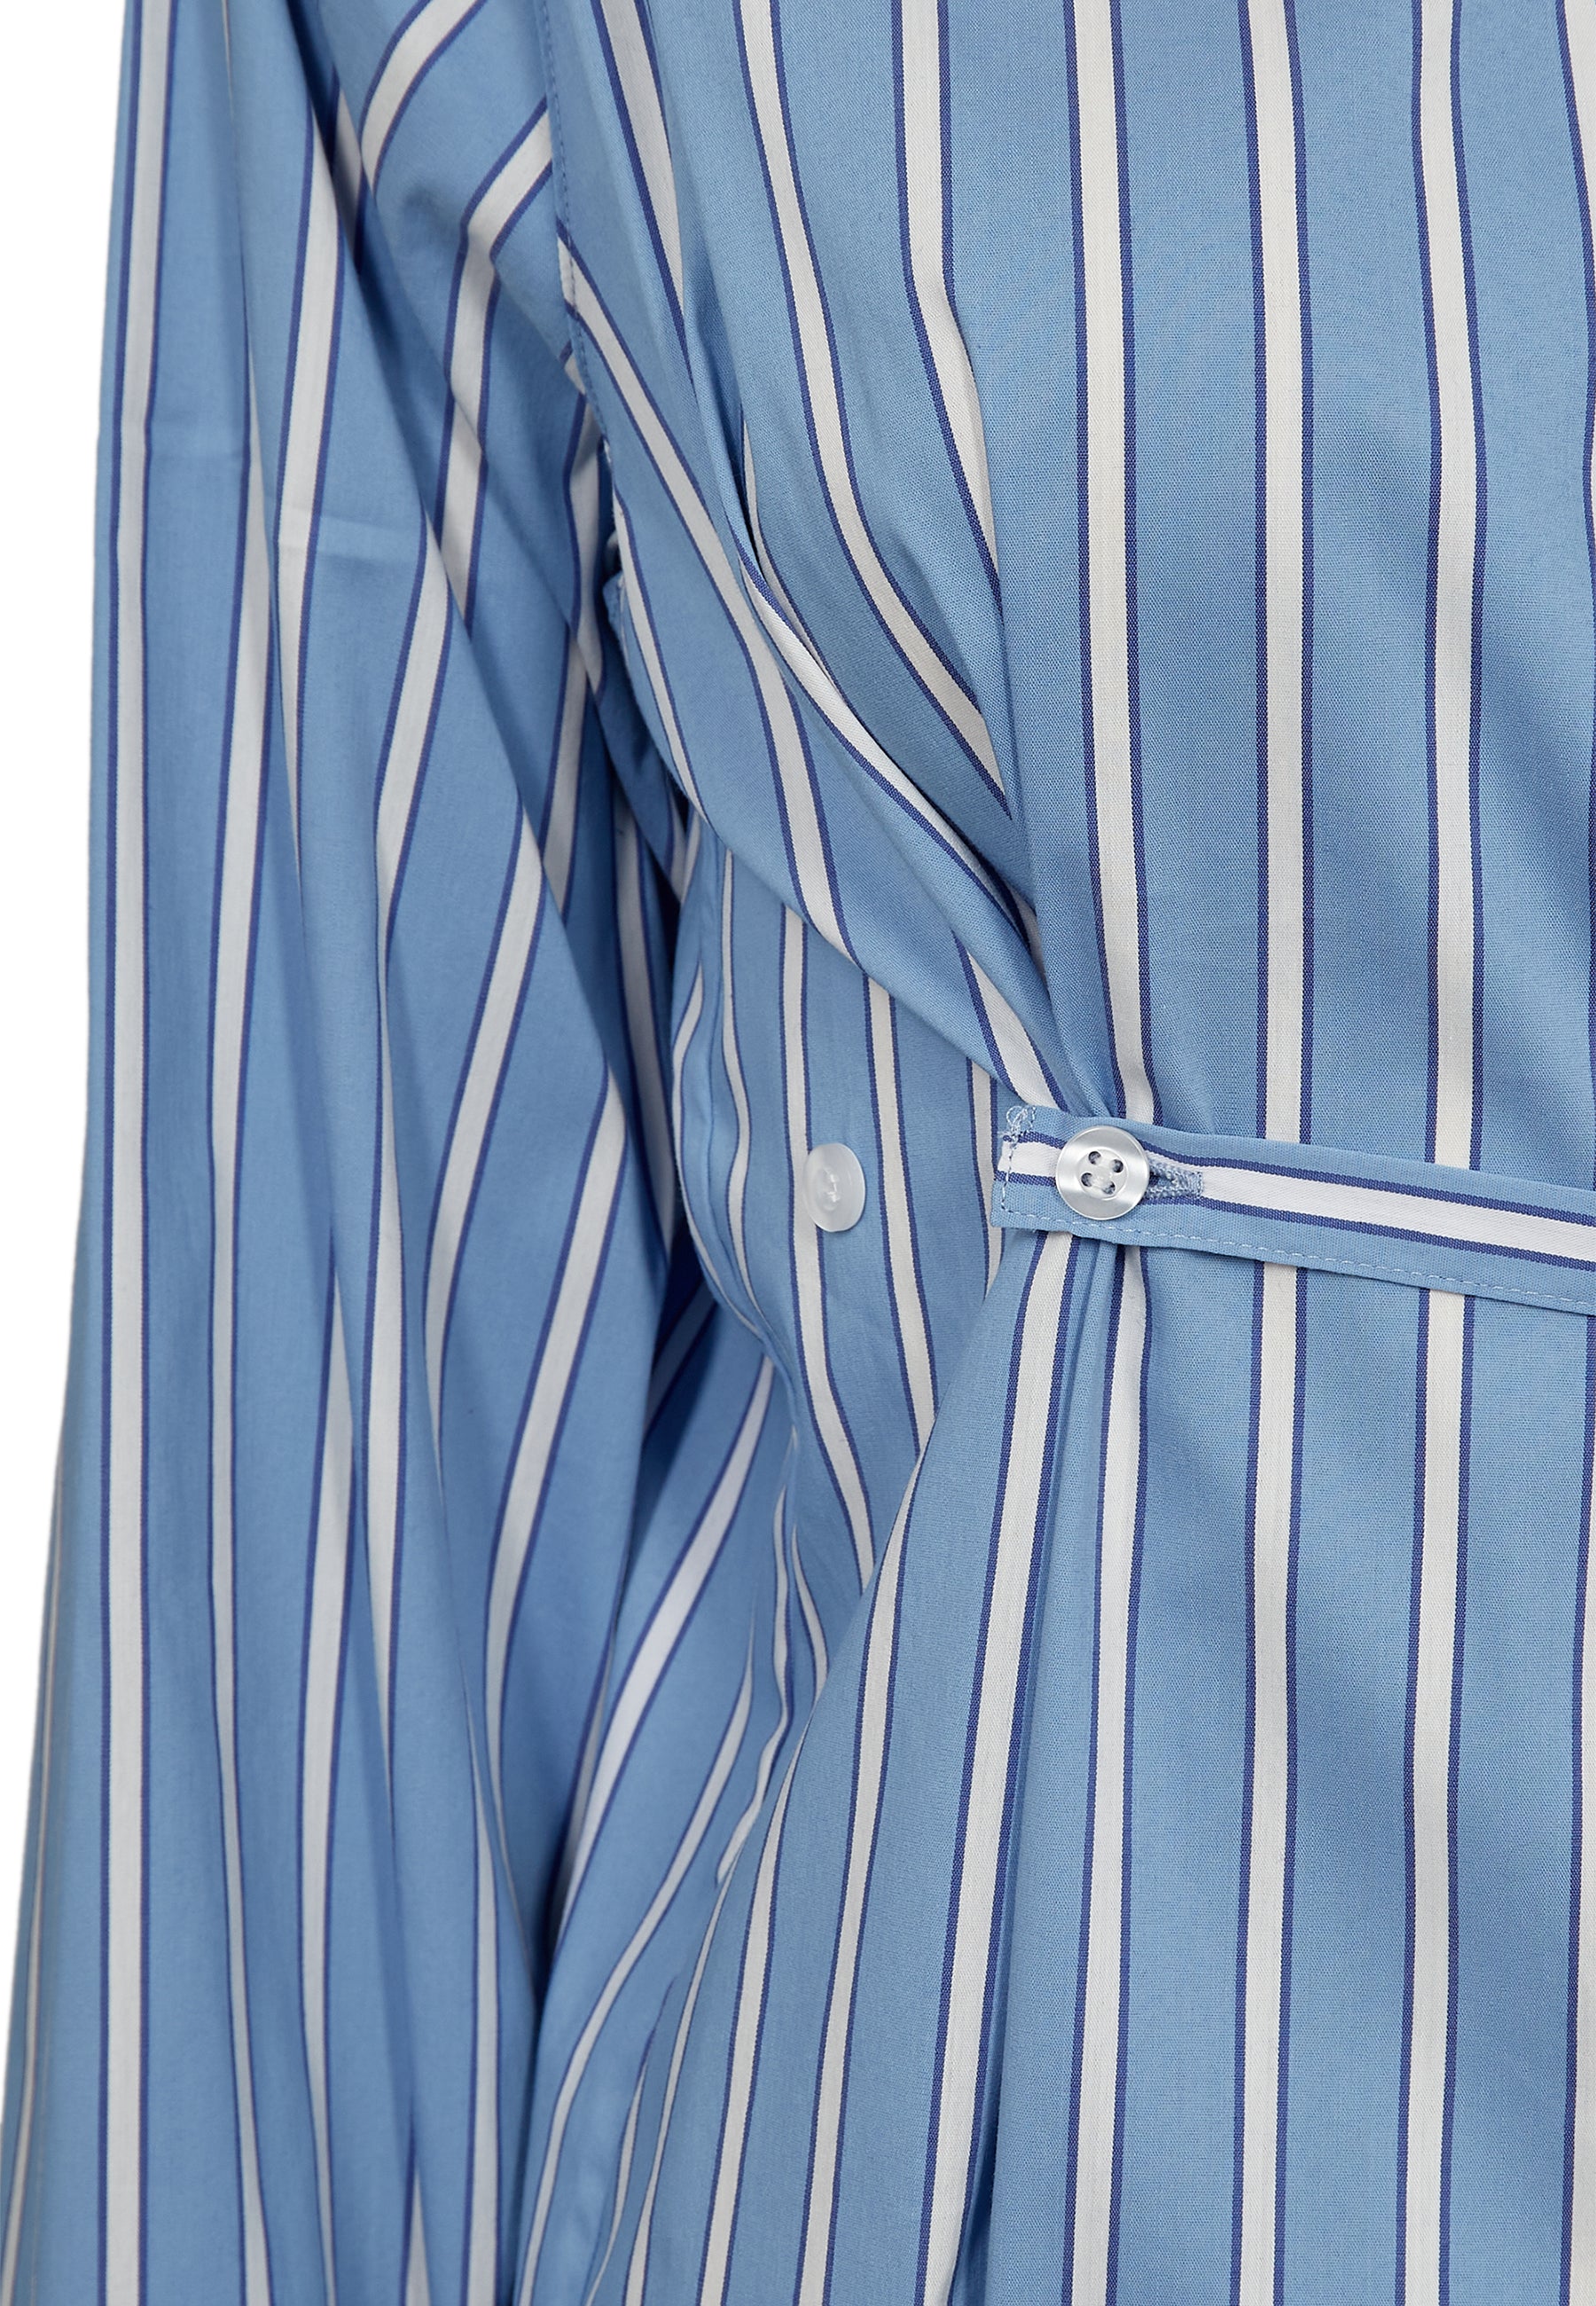 Tomorrow TRW-Gerber Transforming Shirt Malibu Stripe Shirts & Blouses 552 Clear Sky Blue